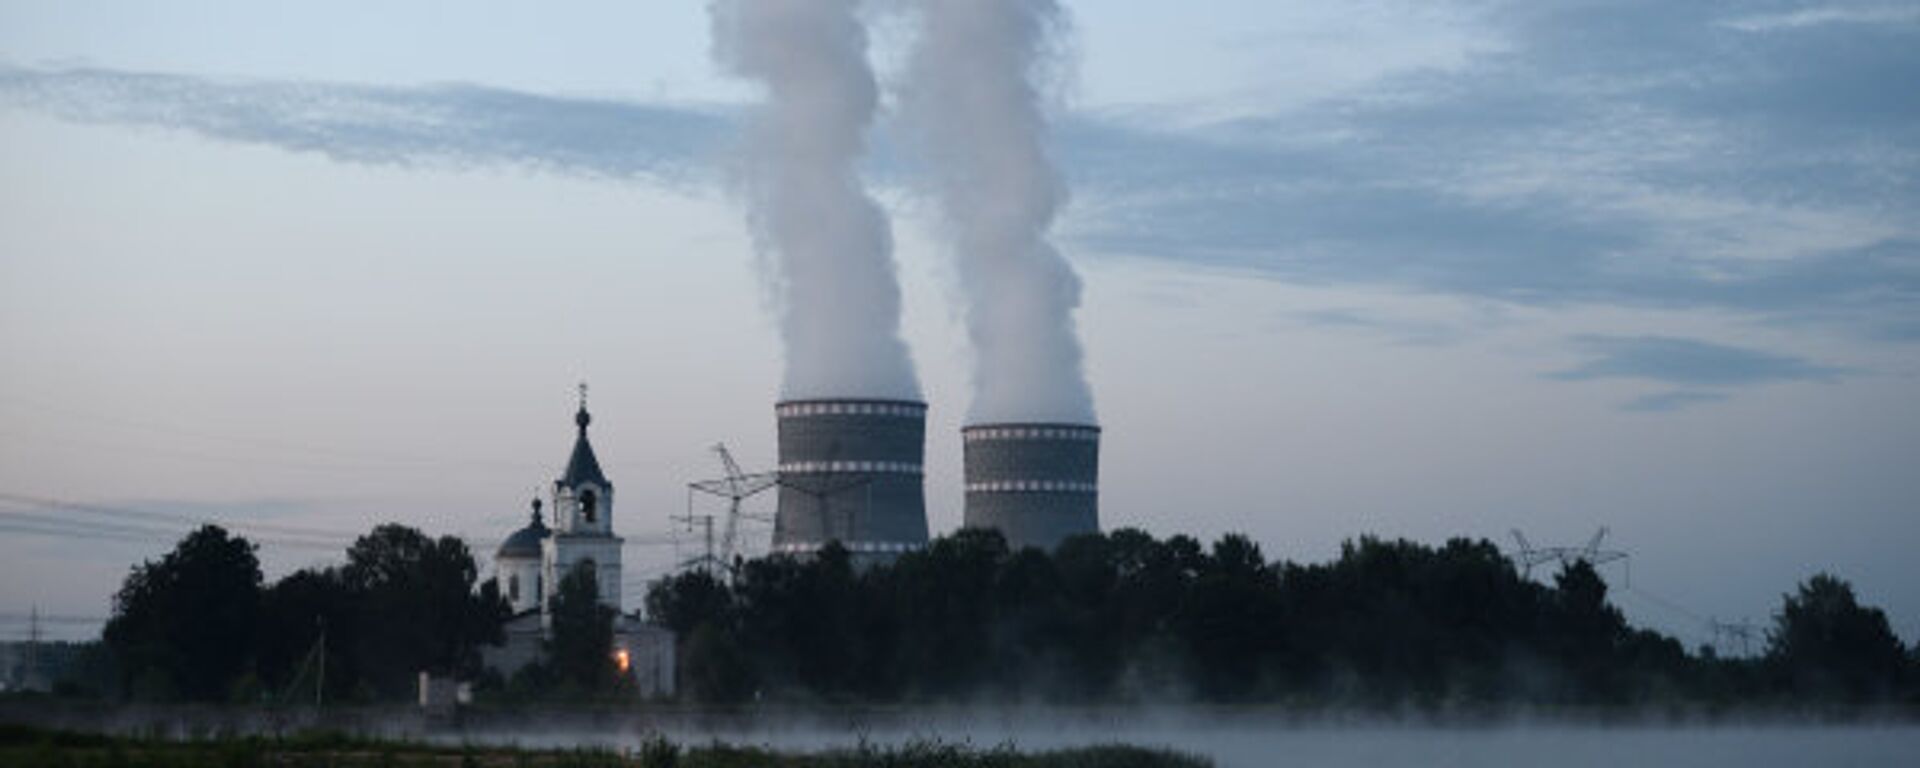 The Kalininskaya Nuclear Power Plant, located near the town of Udomlya in Russia - Sputnik International, 1920, 01.01.2021